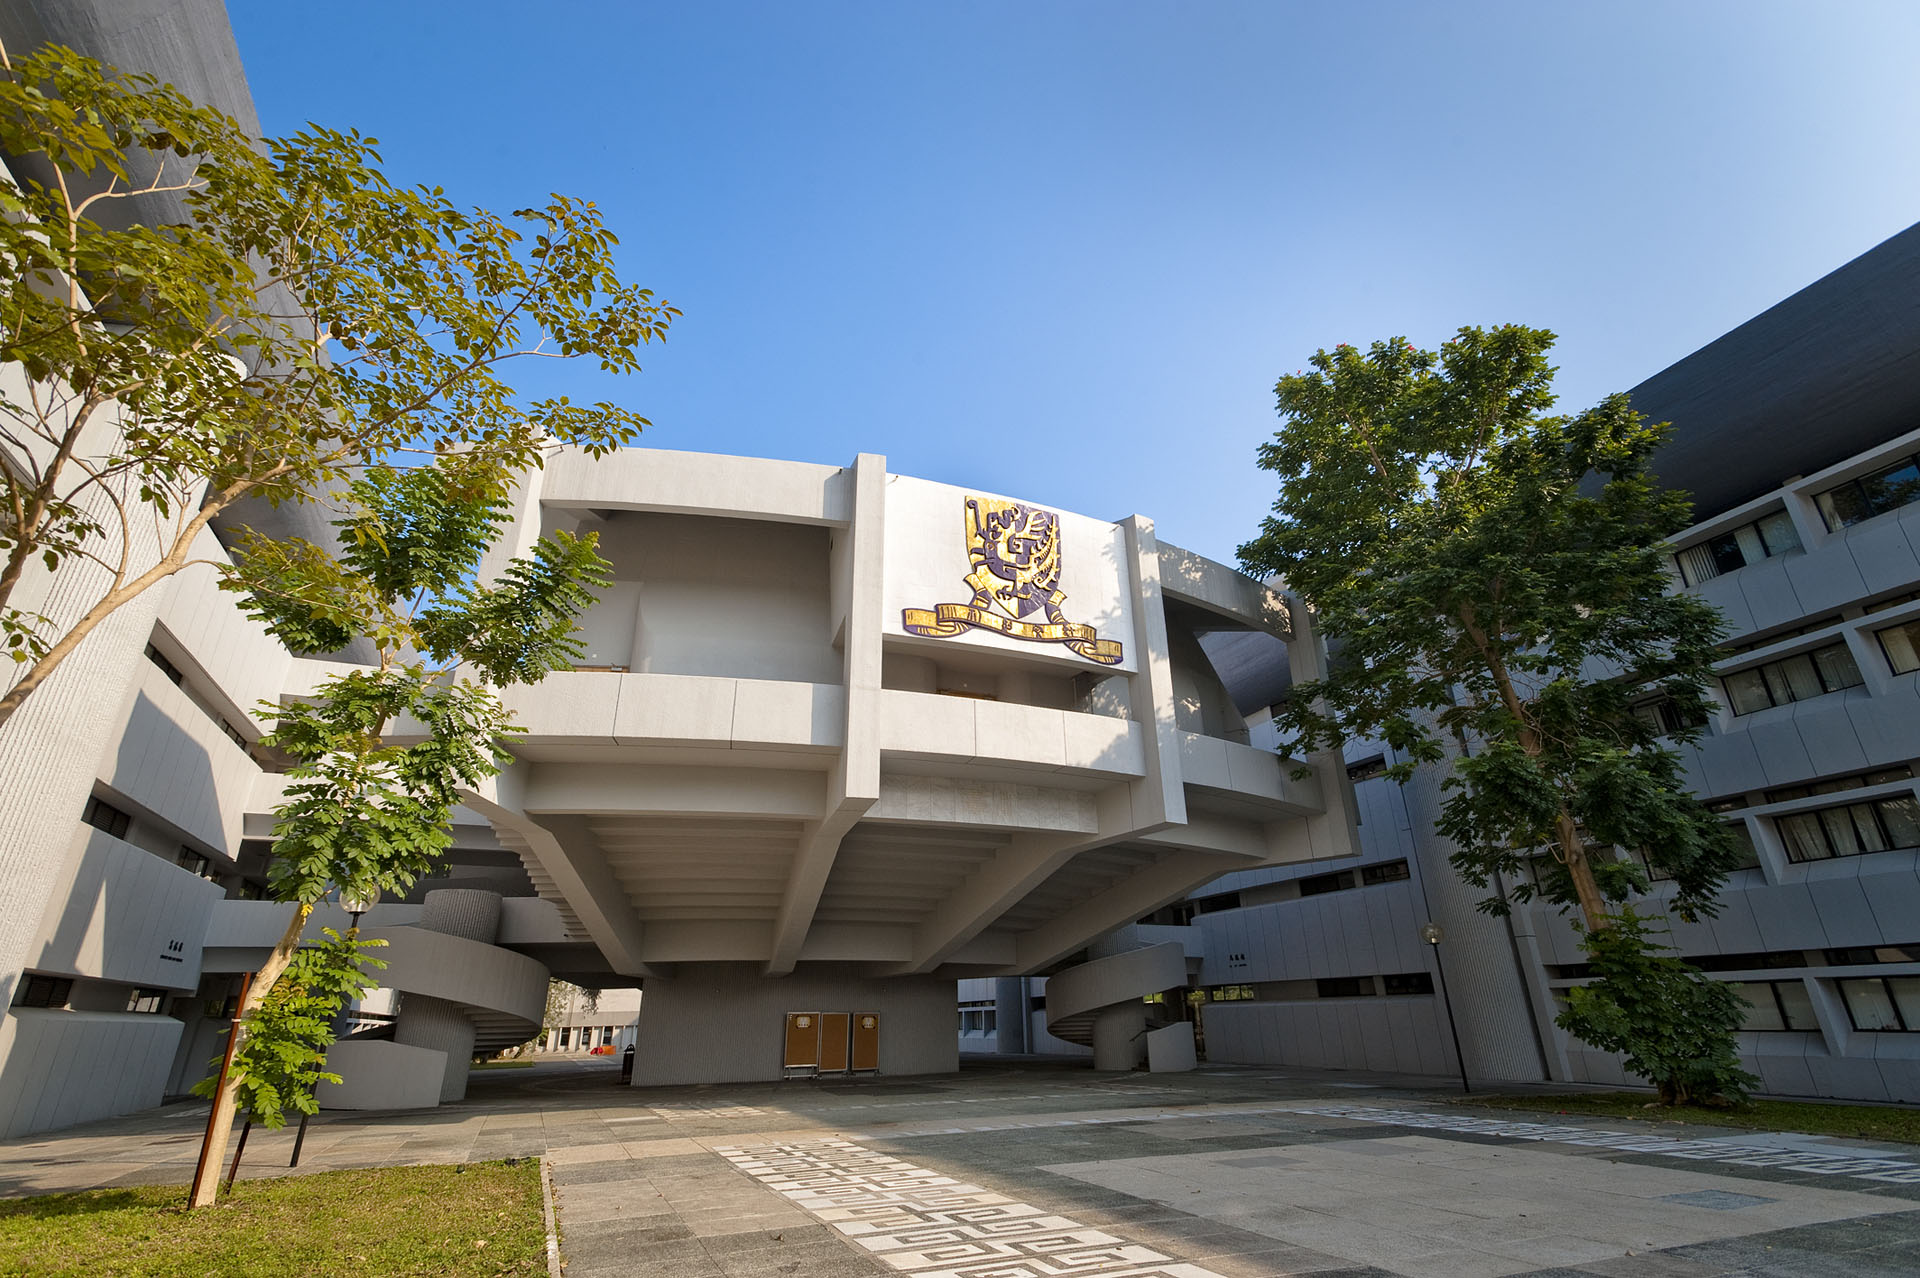 Why CUHK? Top Ranking University in Hong Kong CUHK MBA